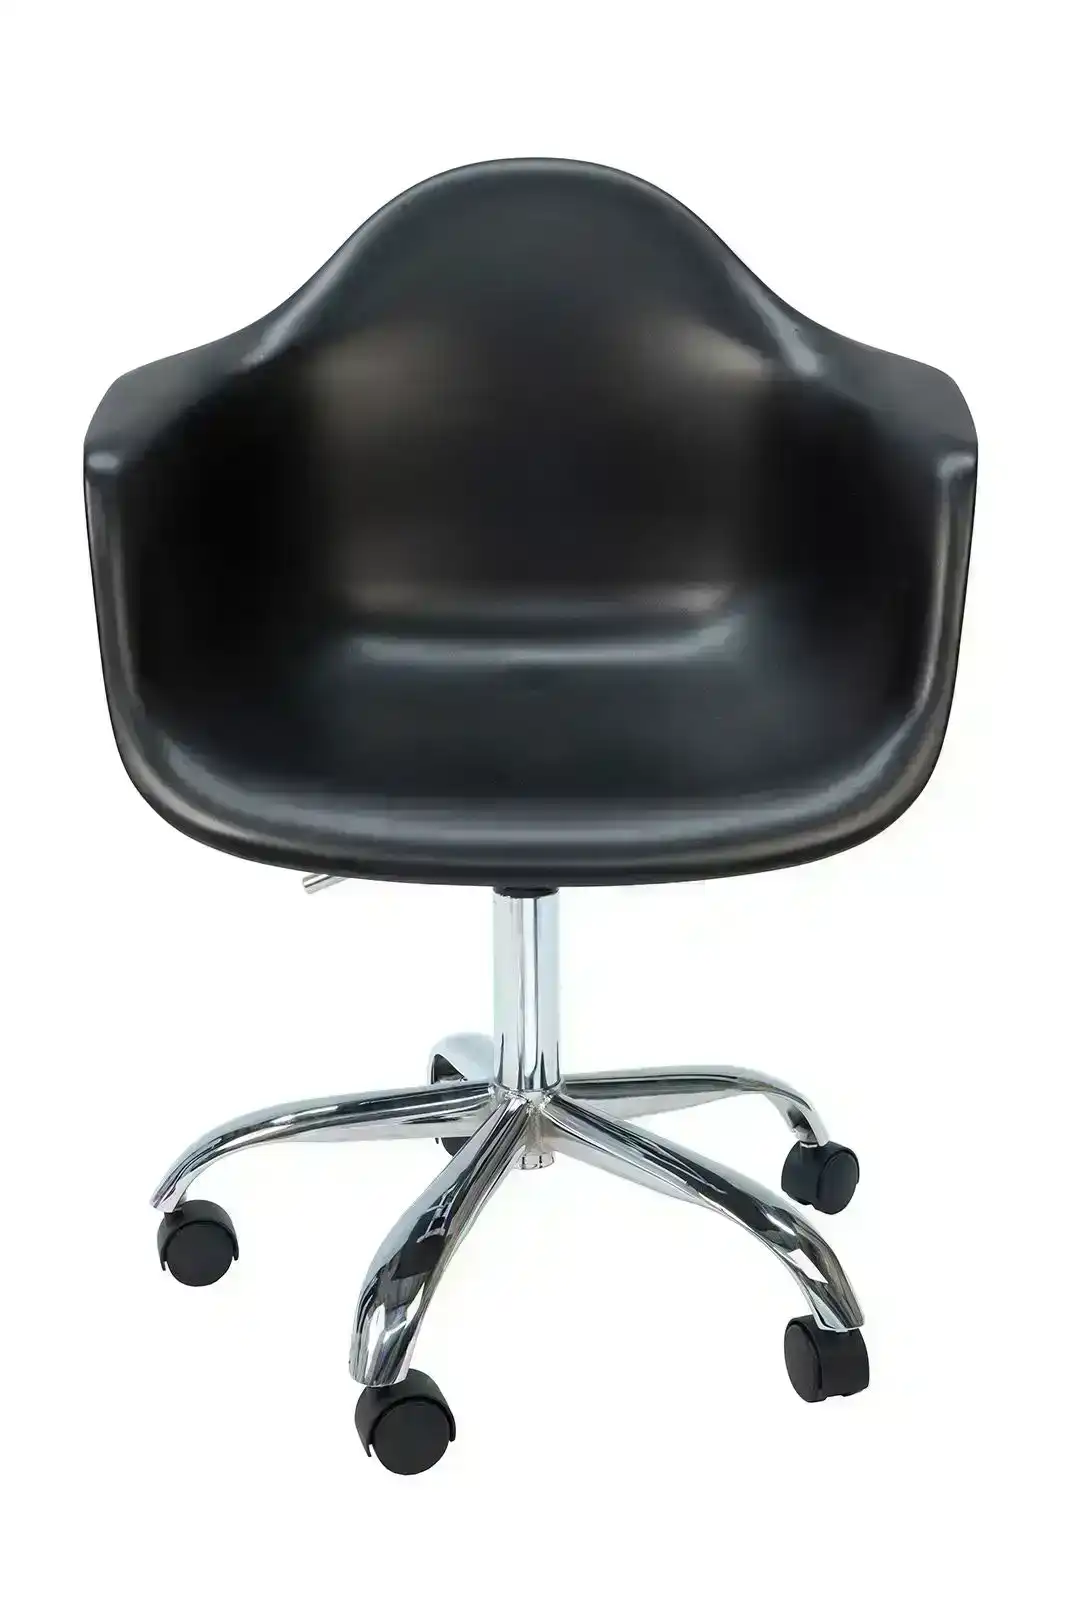 Replica Eames DAW / DAR Desk Chair | Plastic